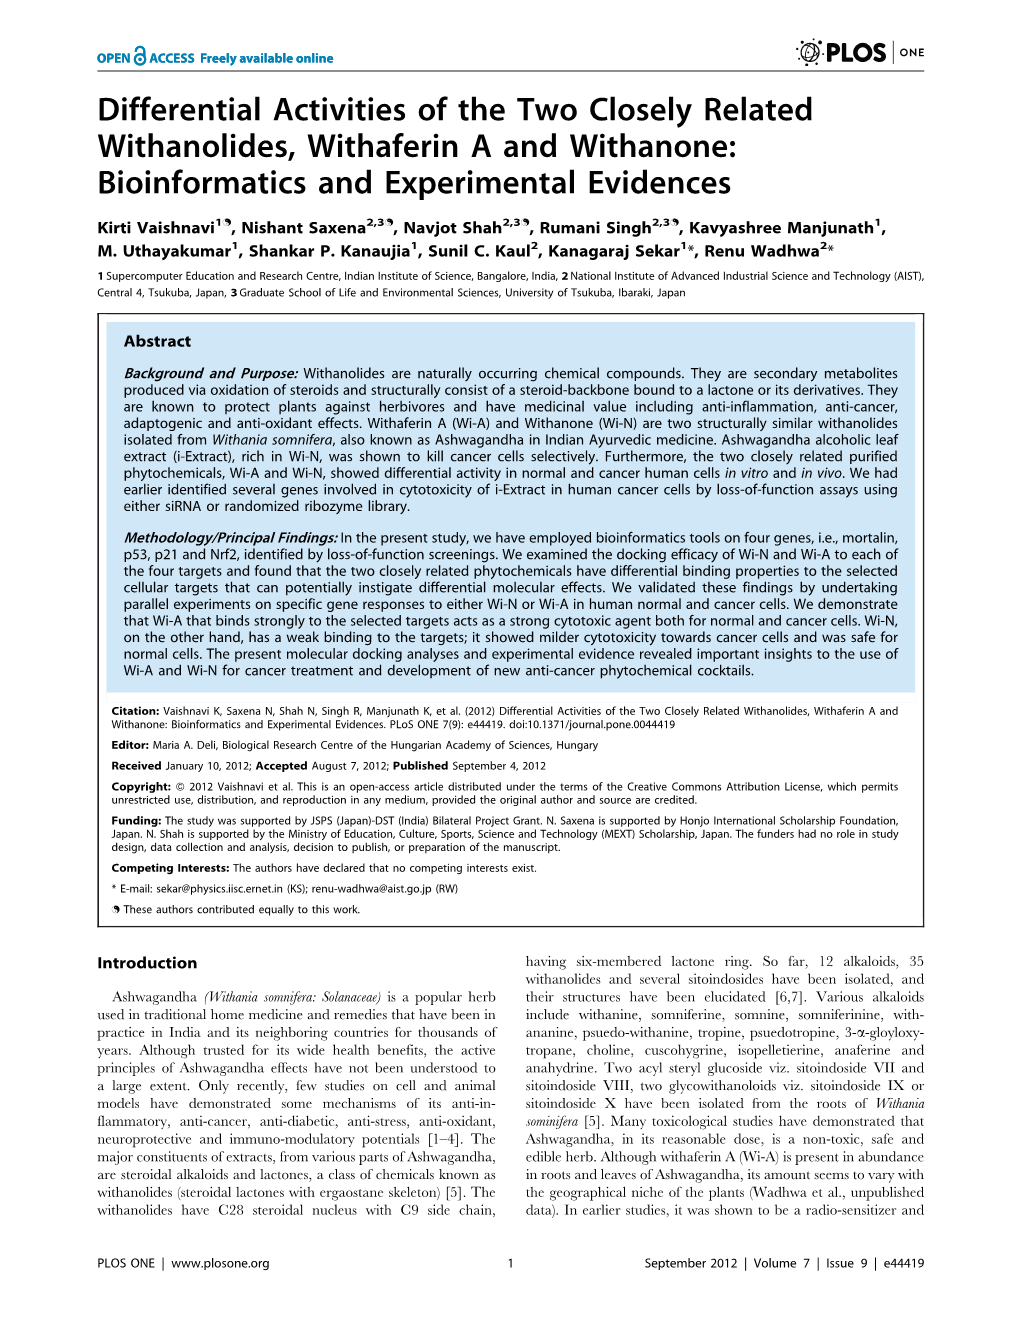 Bioinformatics and Experimental Evidences